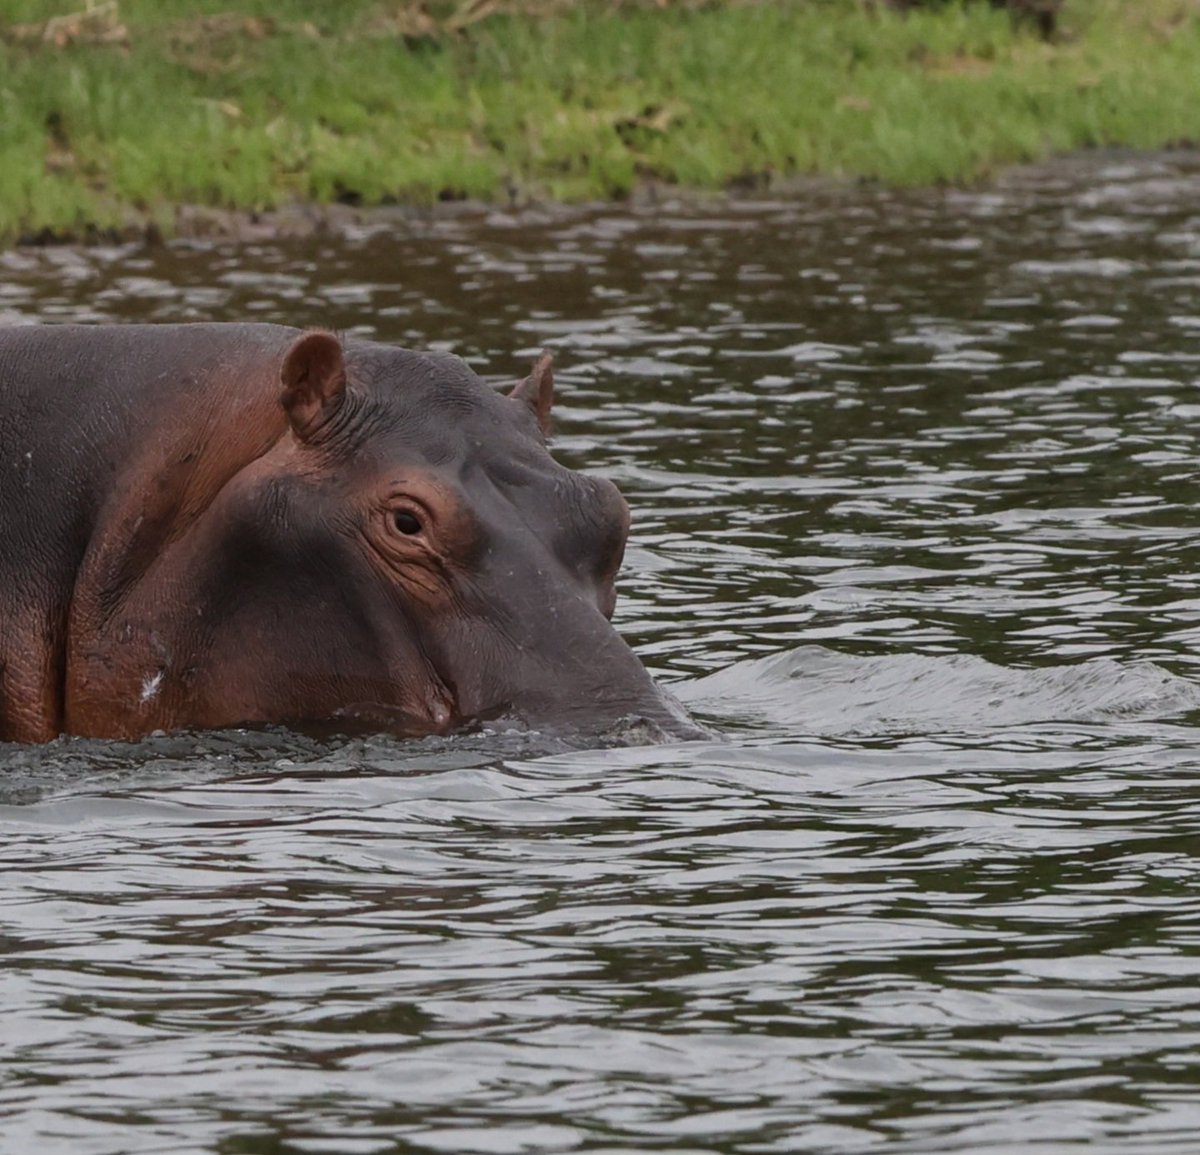 Don't come any closer.
Canon R6Mk2 +Sigma 150-600mm
#photography #Wildlife #Wildlifephotography #Nature #hippopotamus #rwanda #Africa #akageranationalpark